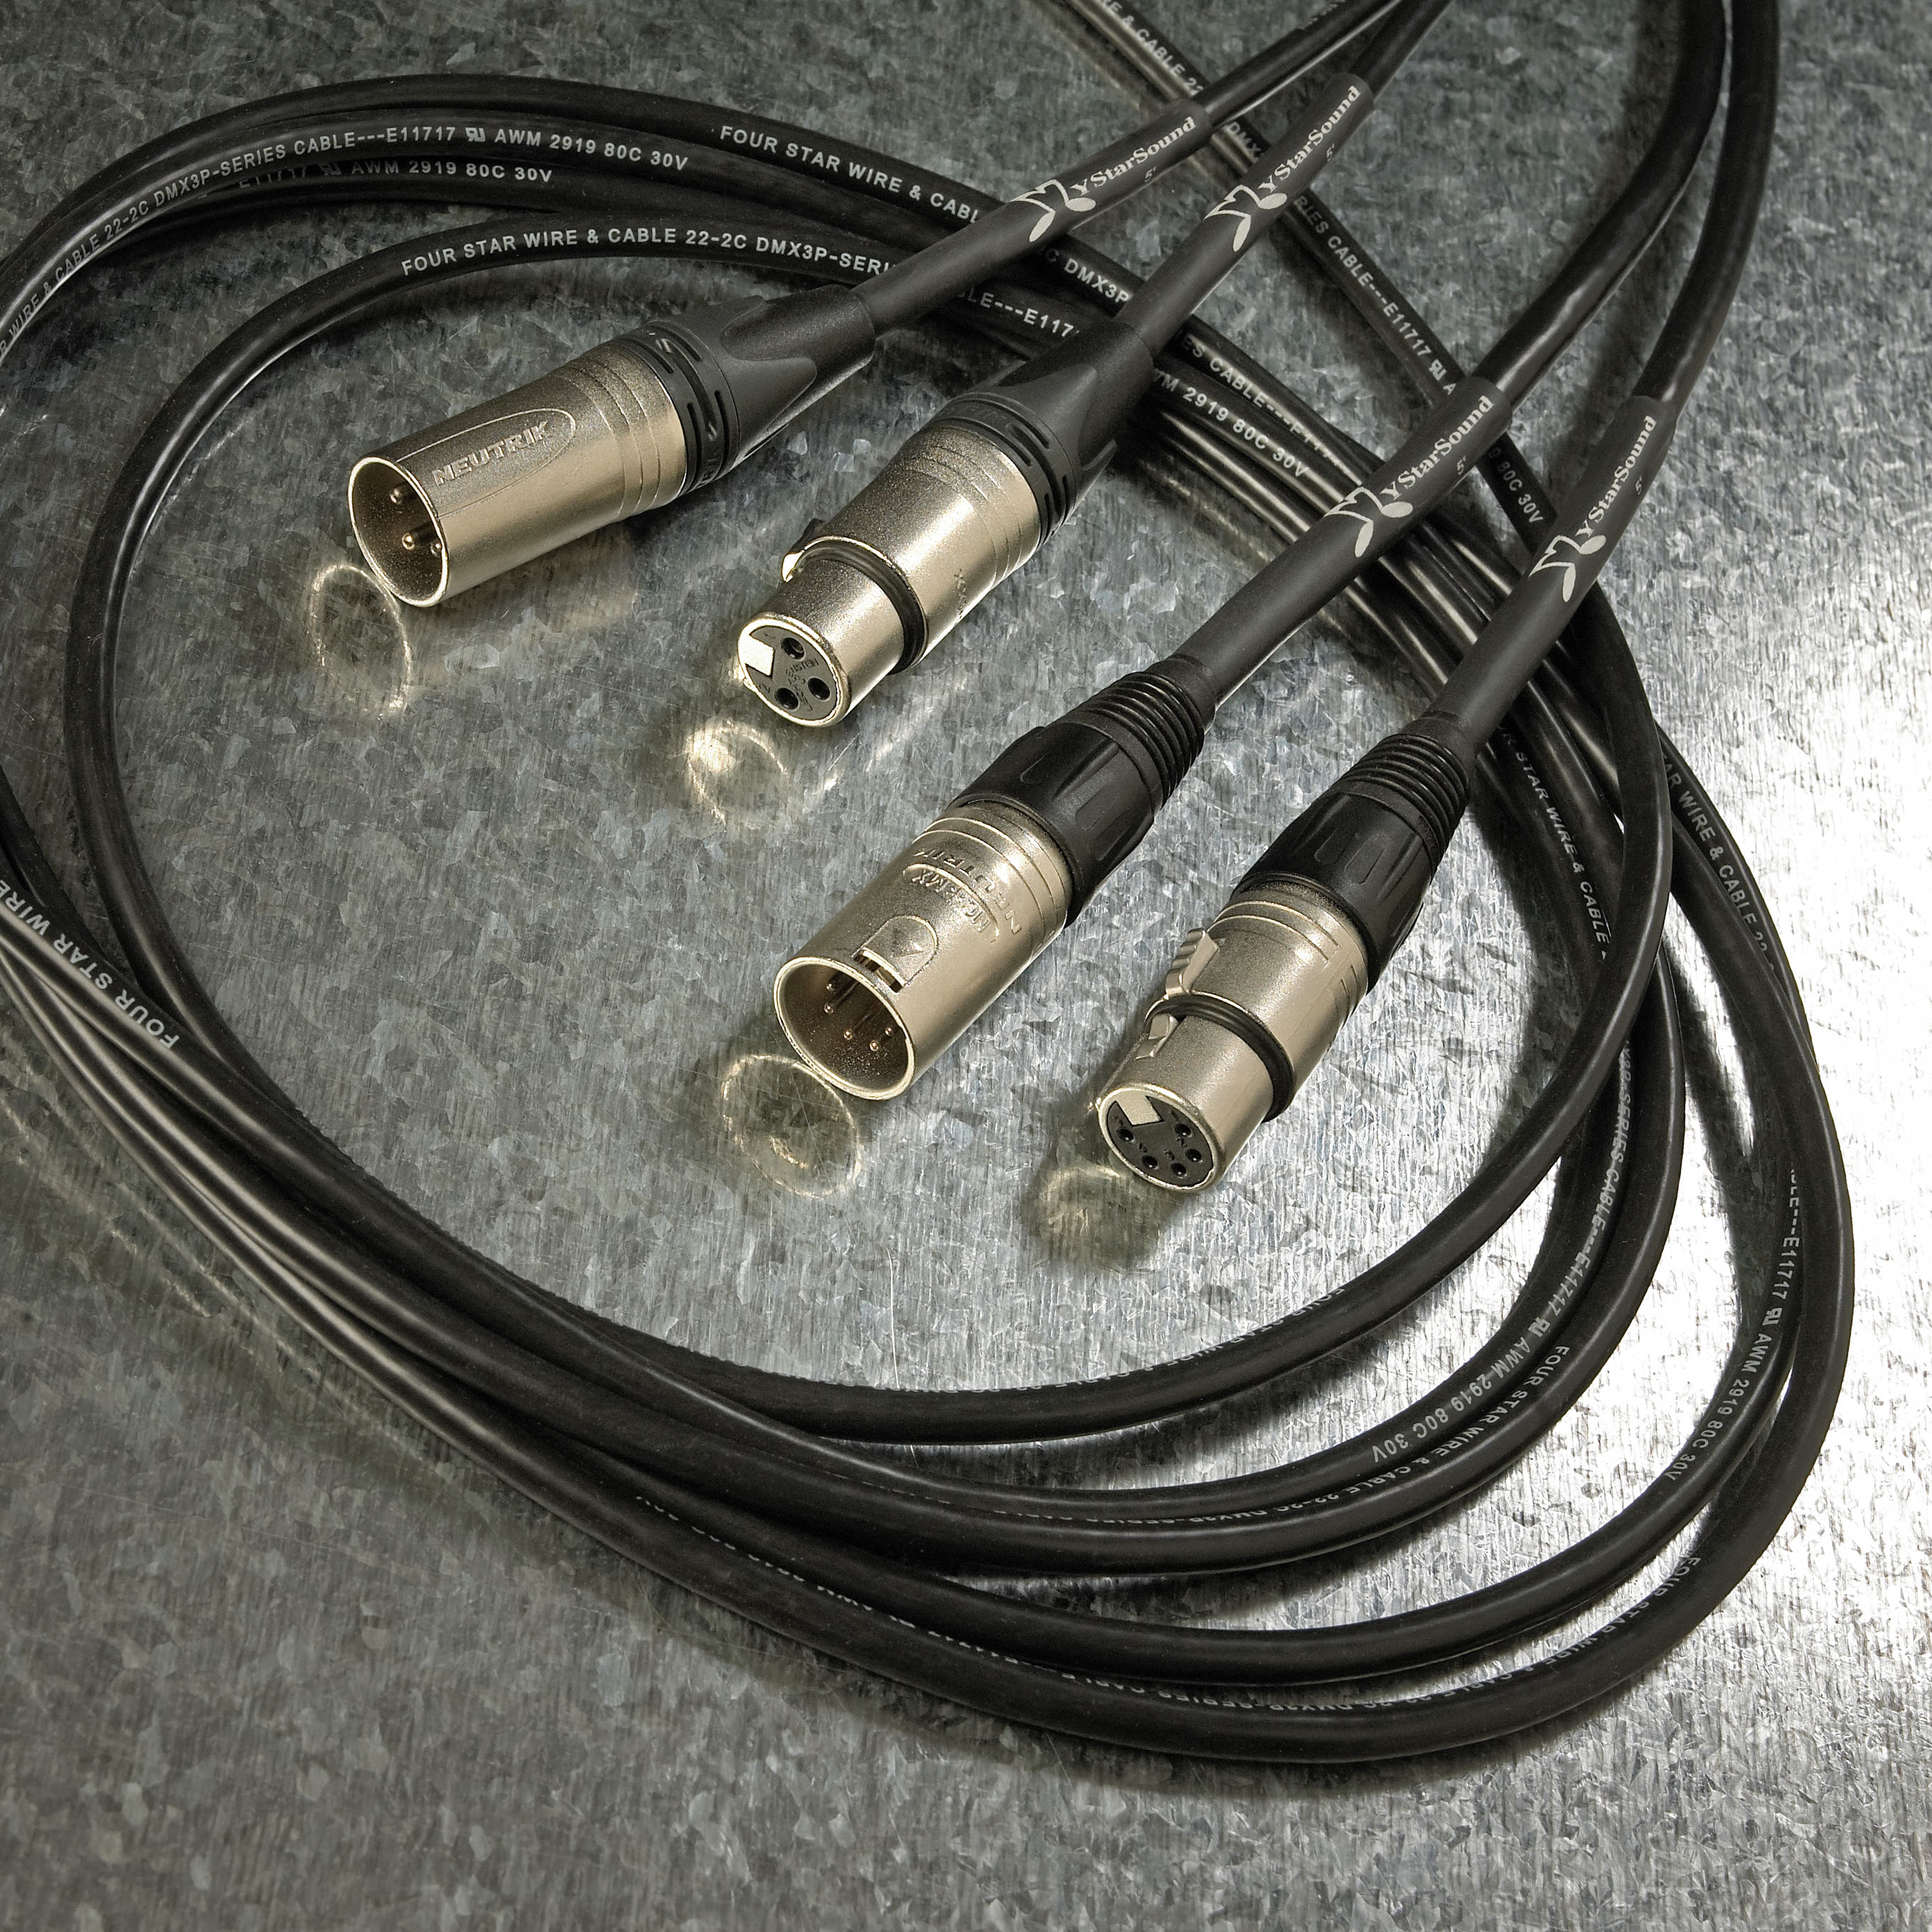 4 conductor speaker wire